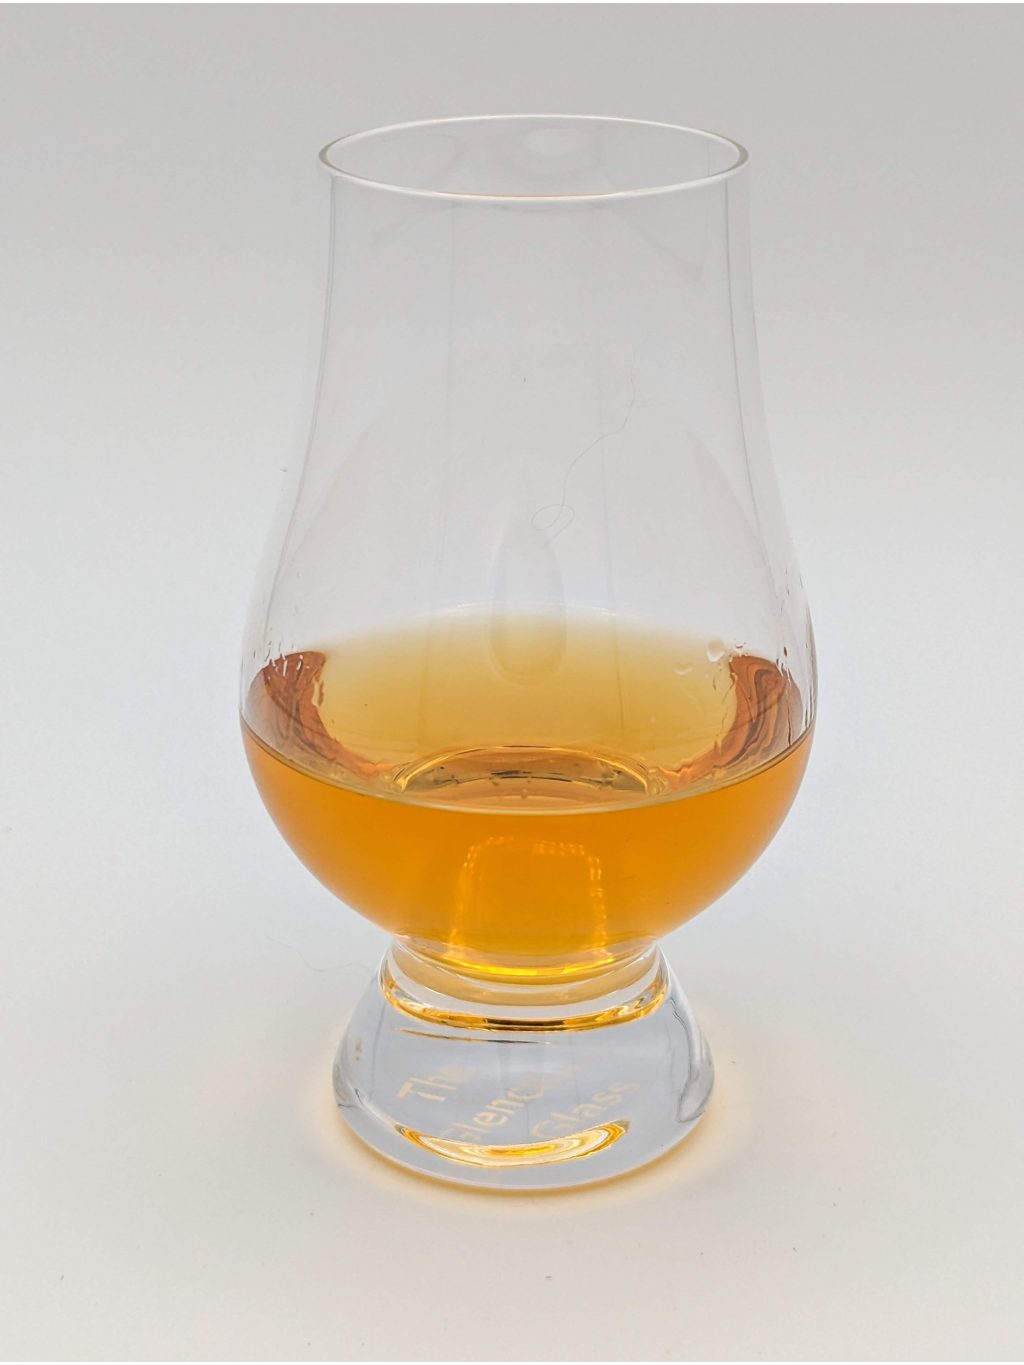 Honey colored liquid in a glen cairn glass